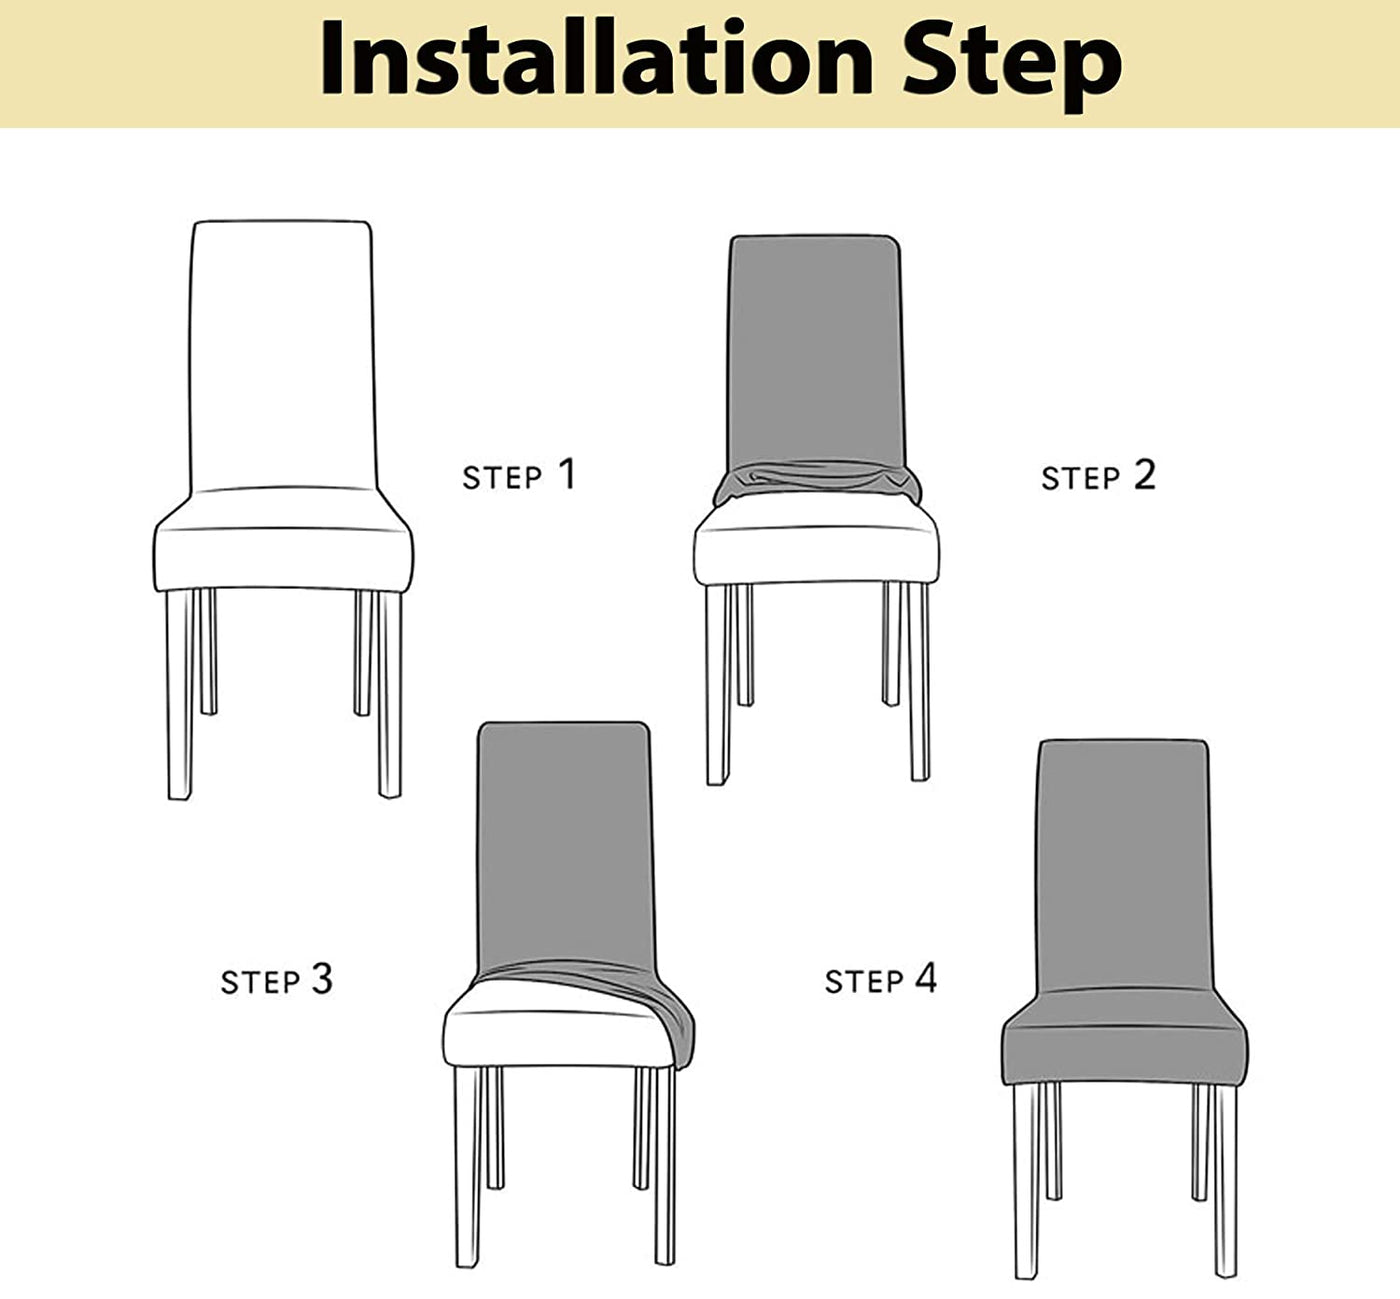 Elastic Chair Cover (Multi Block)